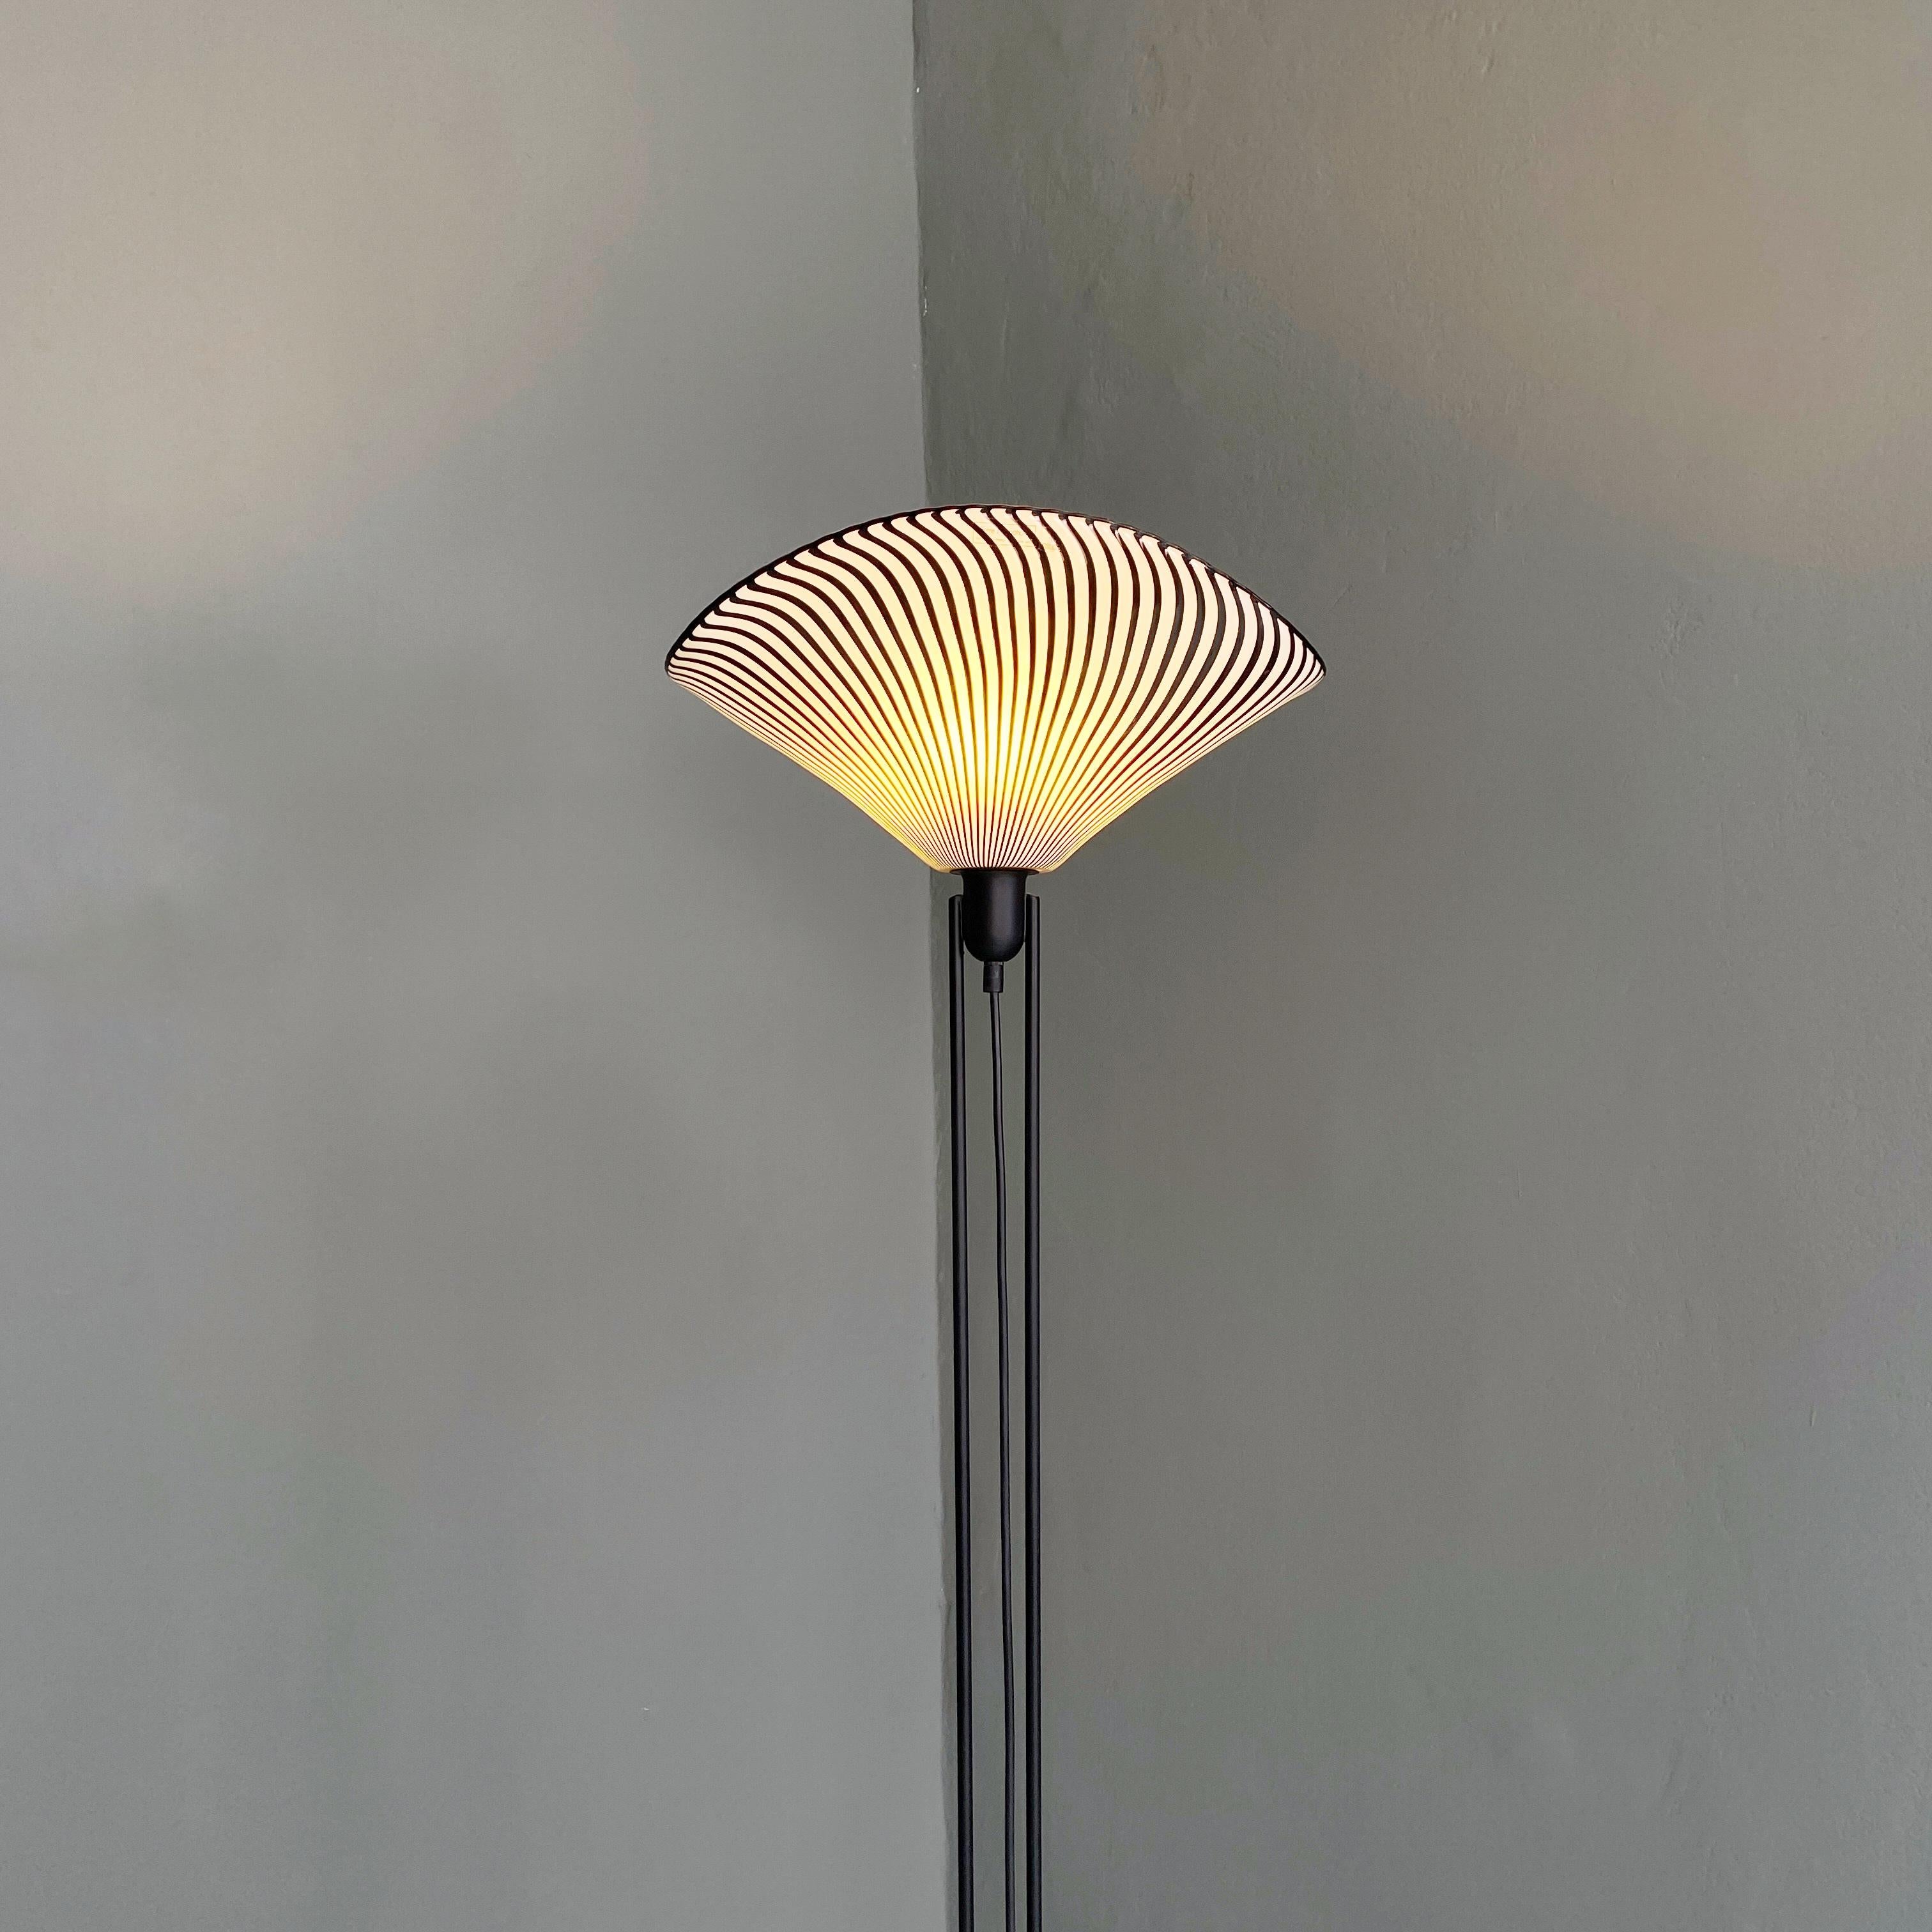 Murano Glass Floor Lamp by Lino Tagliapietra for Effetre Murano, 1960s For Sale 2